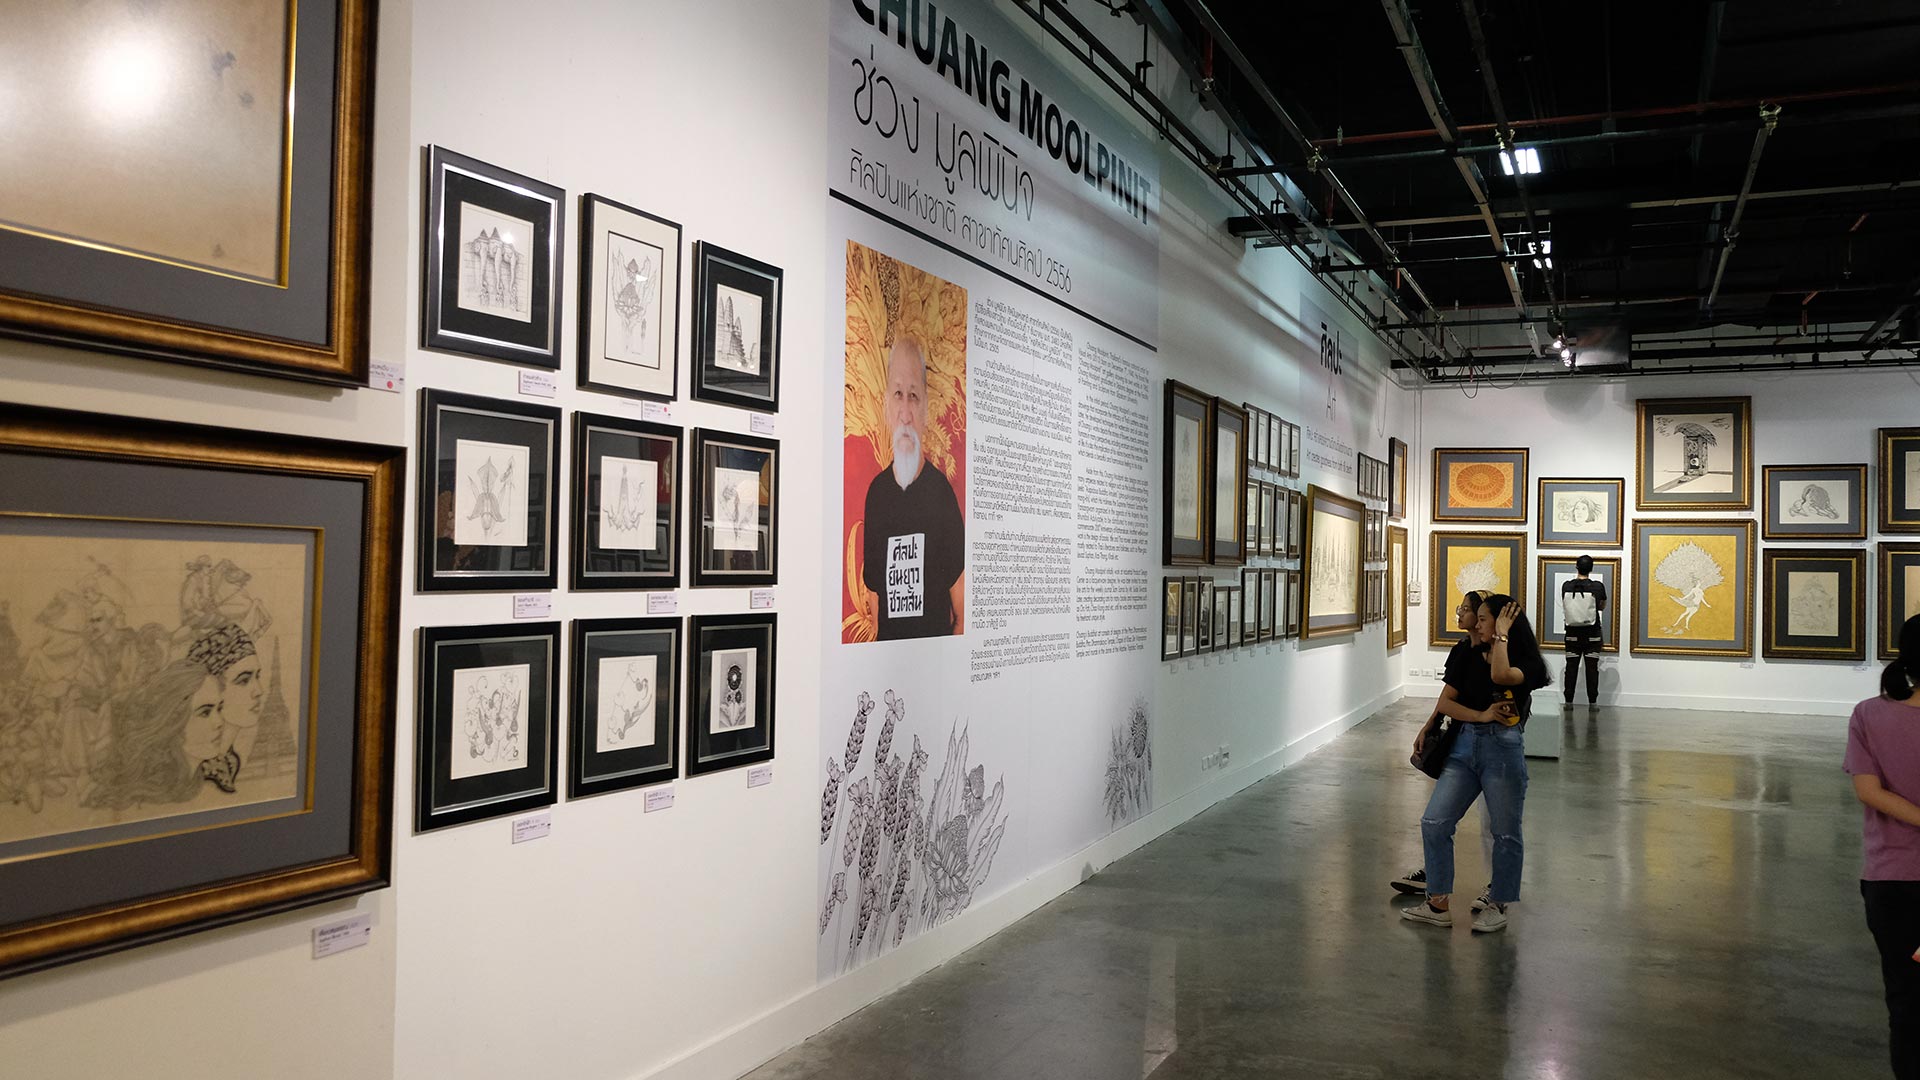 Exhibitions Twilight Zone 2 Exhibition By Chuang Munpinij | นิทรรศการ แดนสนธยา ๒ โดย ช่วง มูลพินิจ